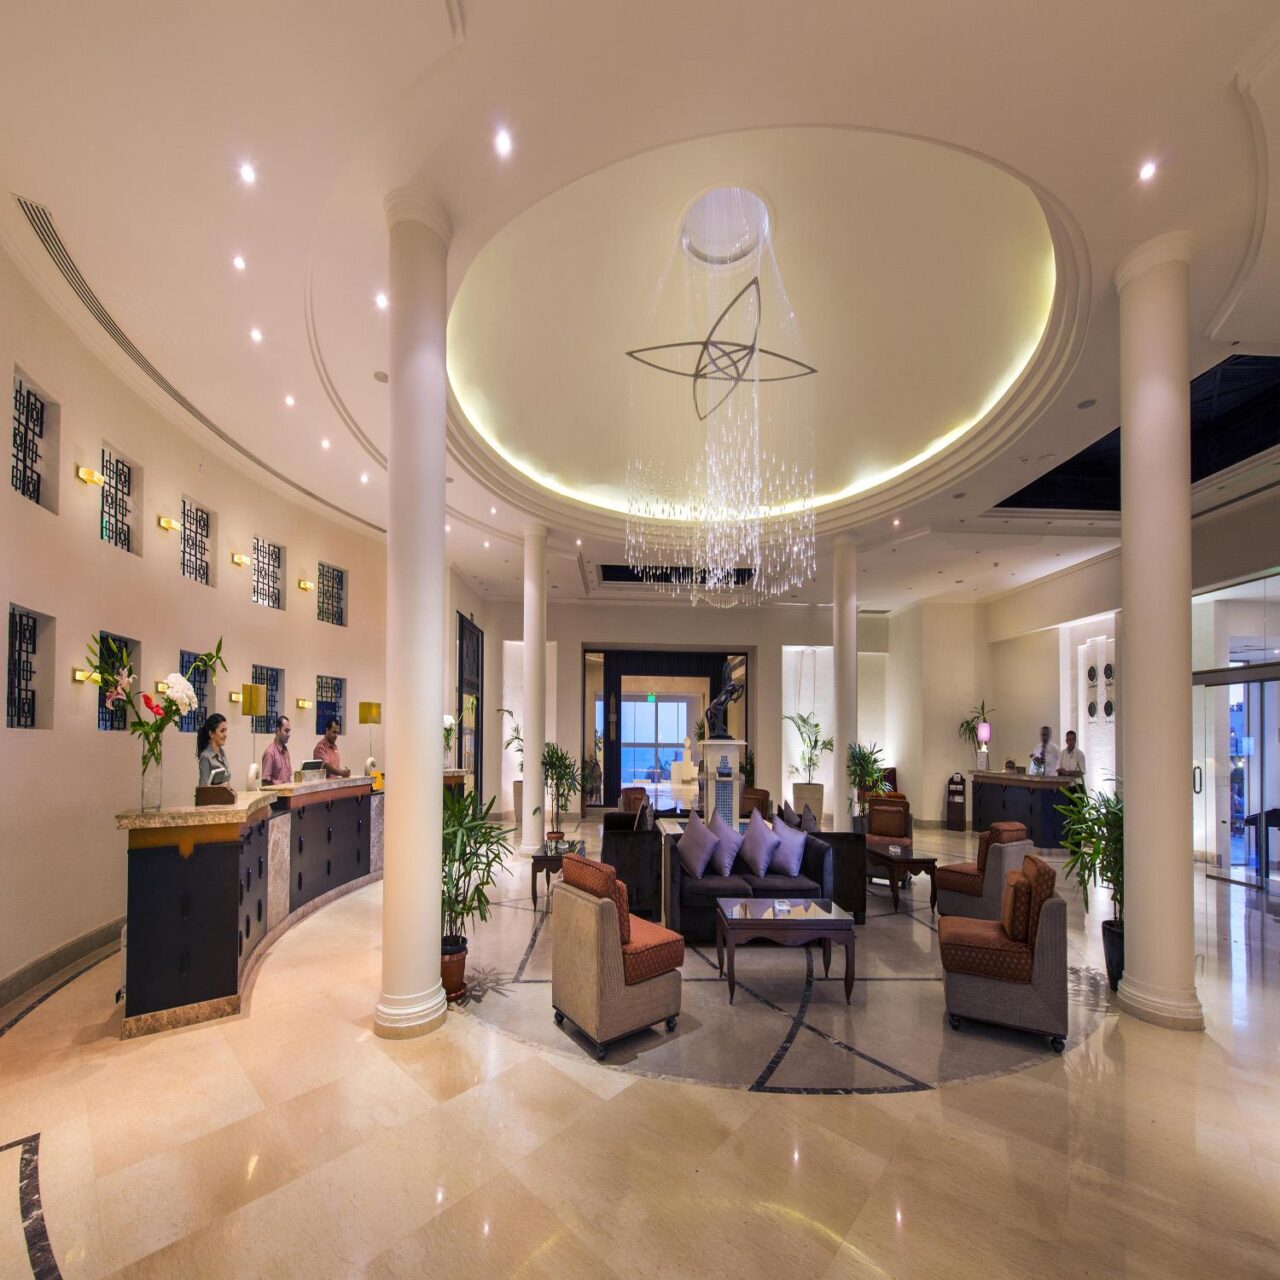 Concorde El Salam Hotel Sharm El Sheikh travel agent in london, UK